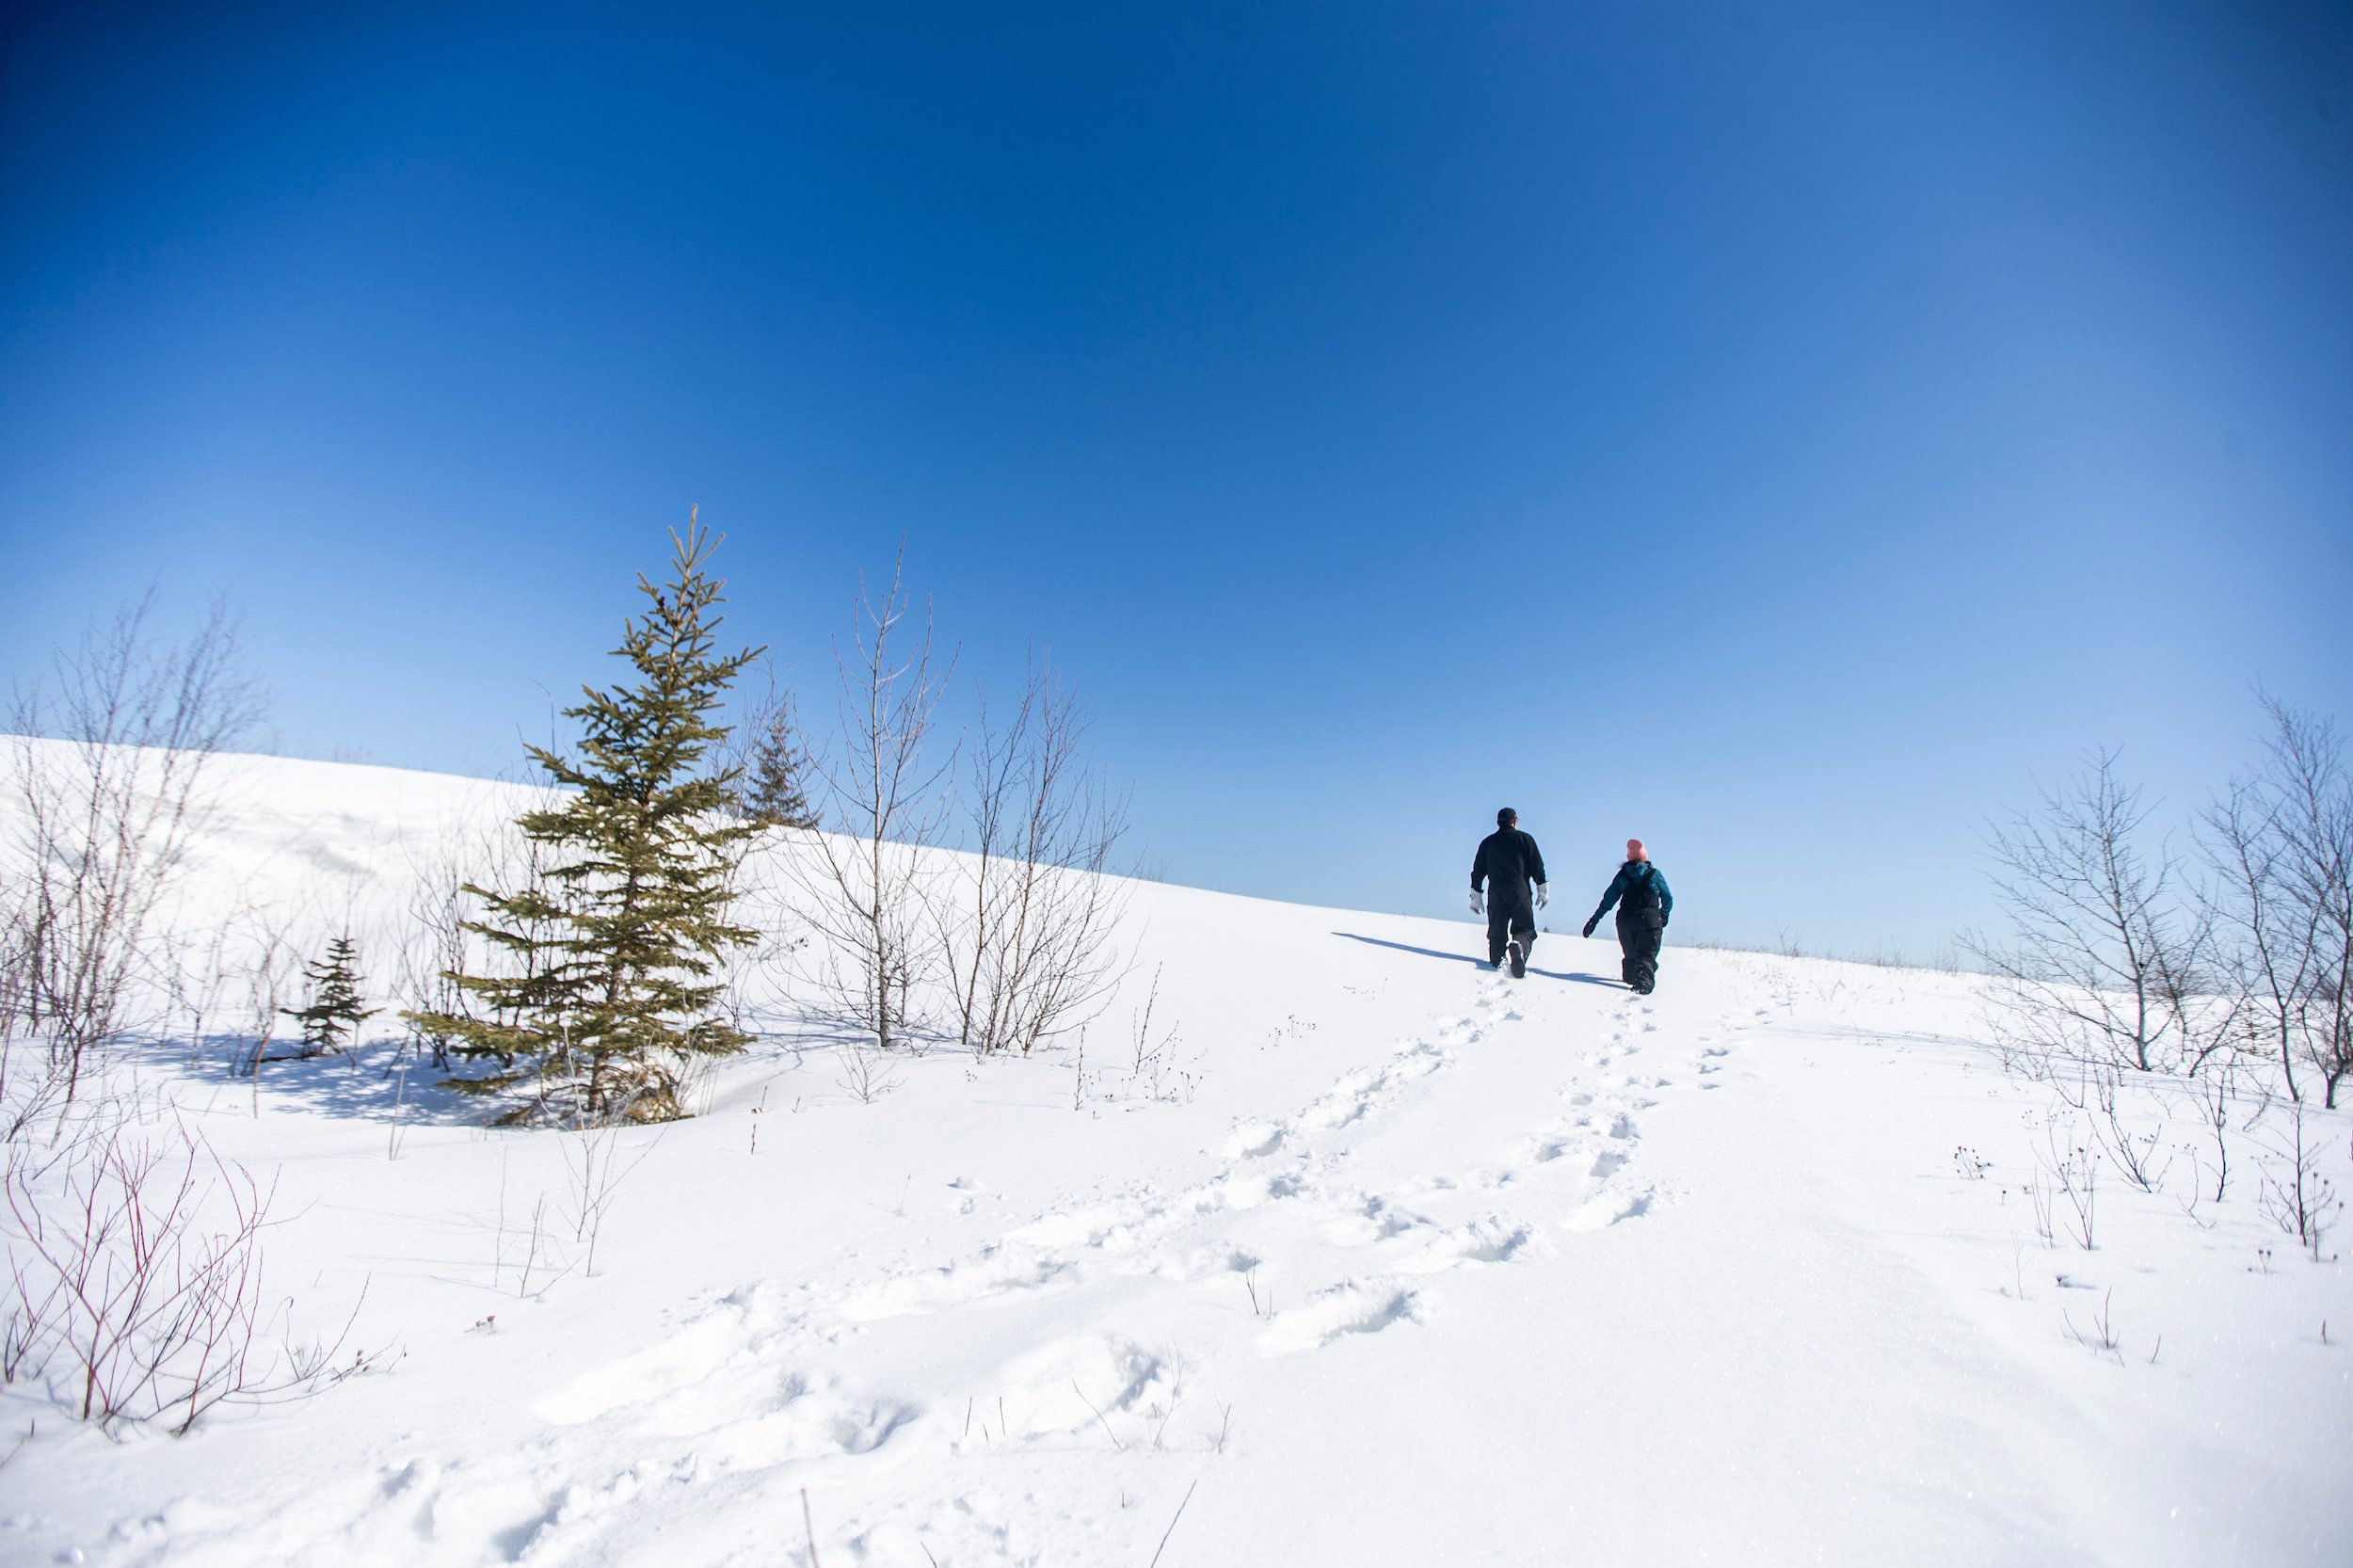 Josh and Georgina Mustard walk up a snowy ridge towards the site where Sio Silica has begun exploratory drilling on the proposed Vivian, Manitoba sand mine